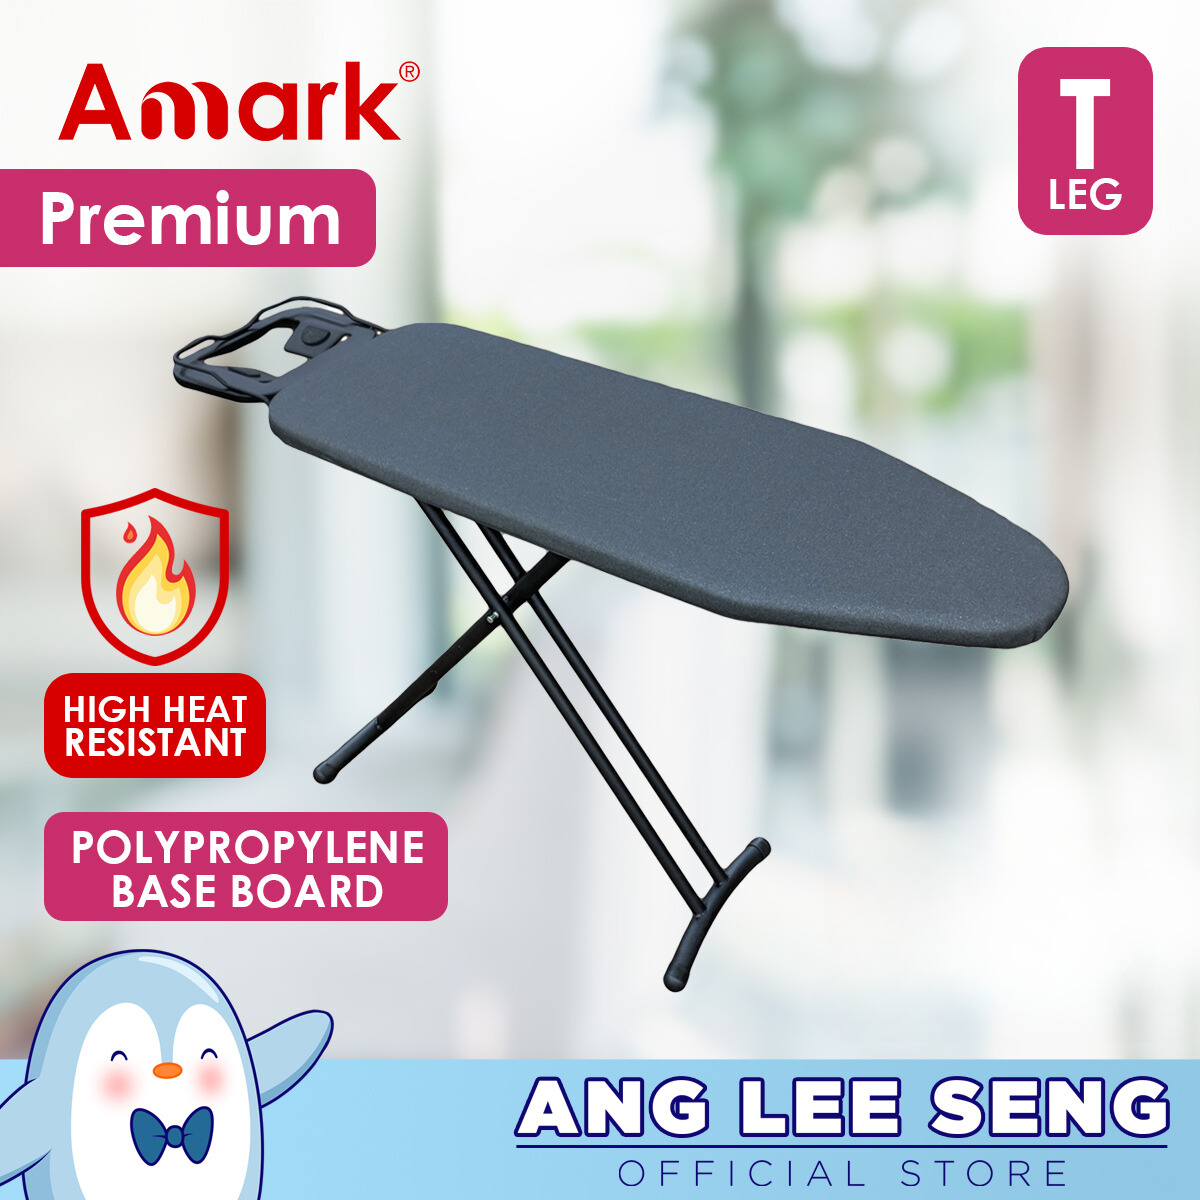 Amark Premium High Heat Resistant T-Leg Ironing Board with Enhanced Iron Rest